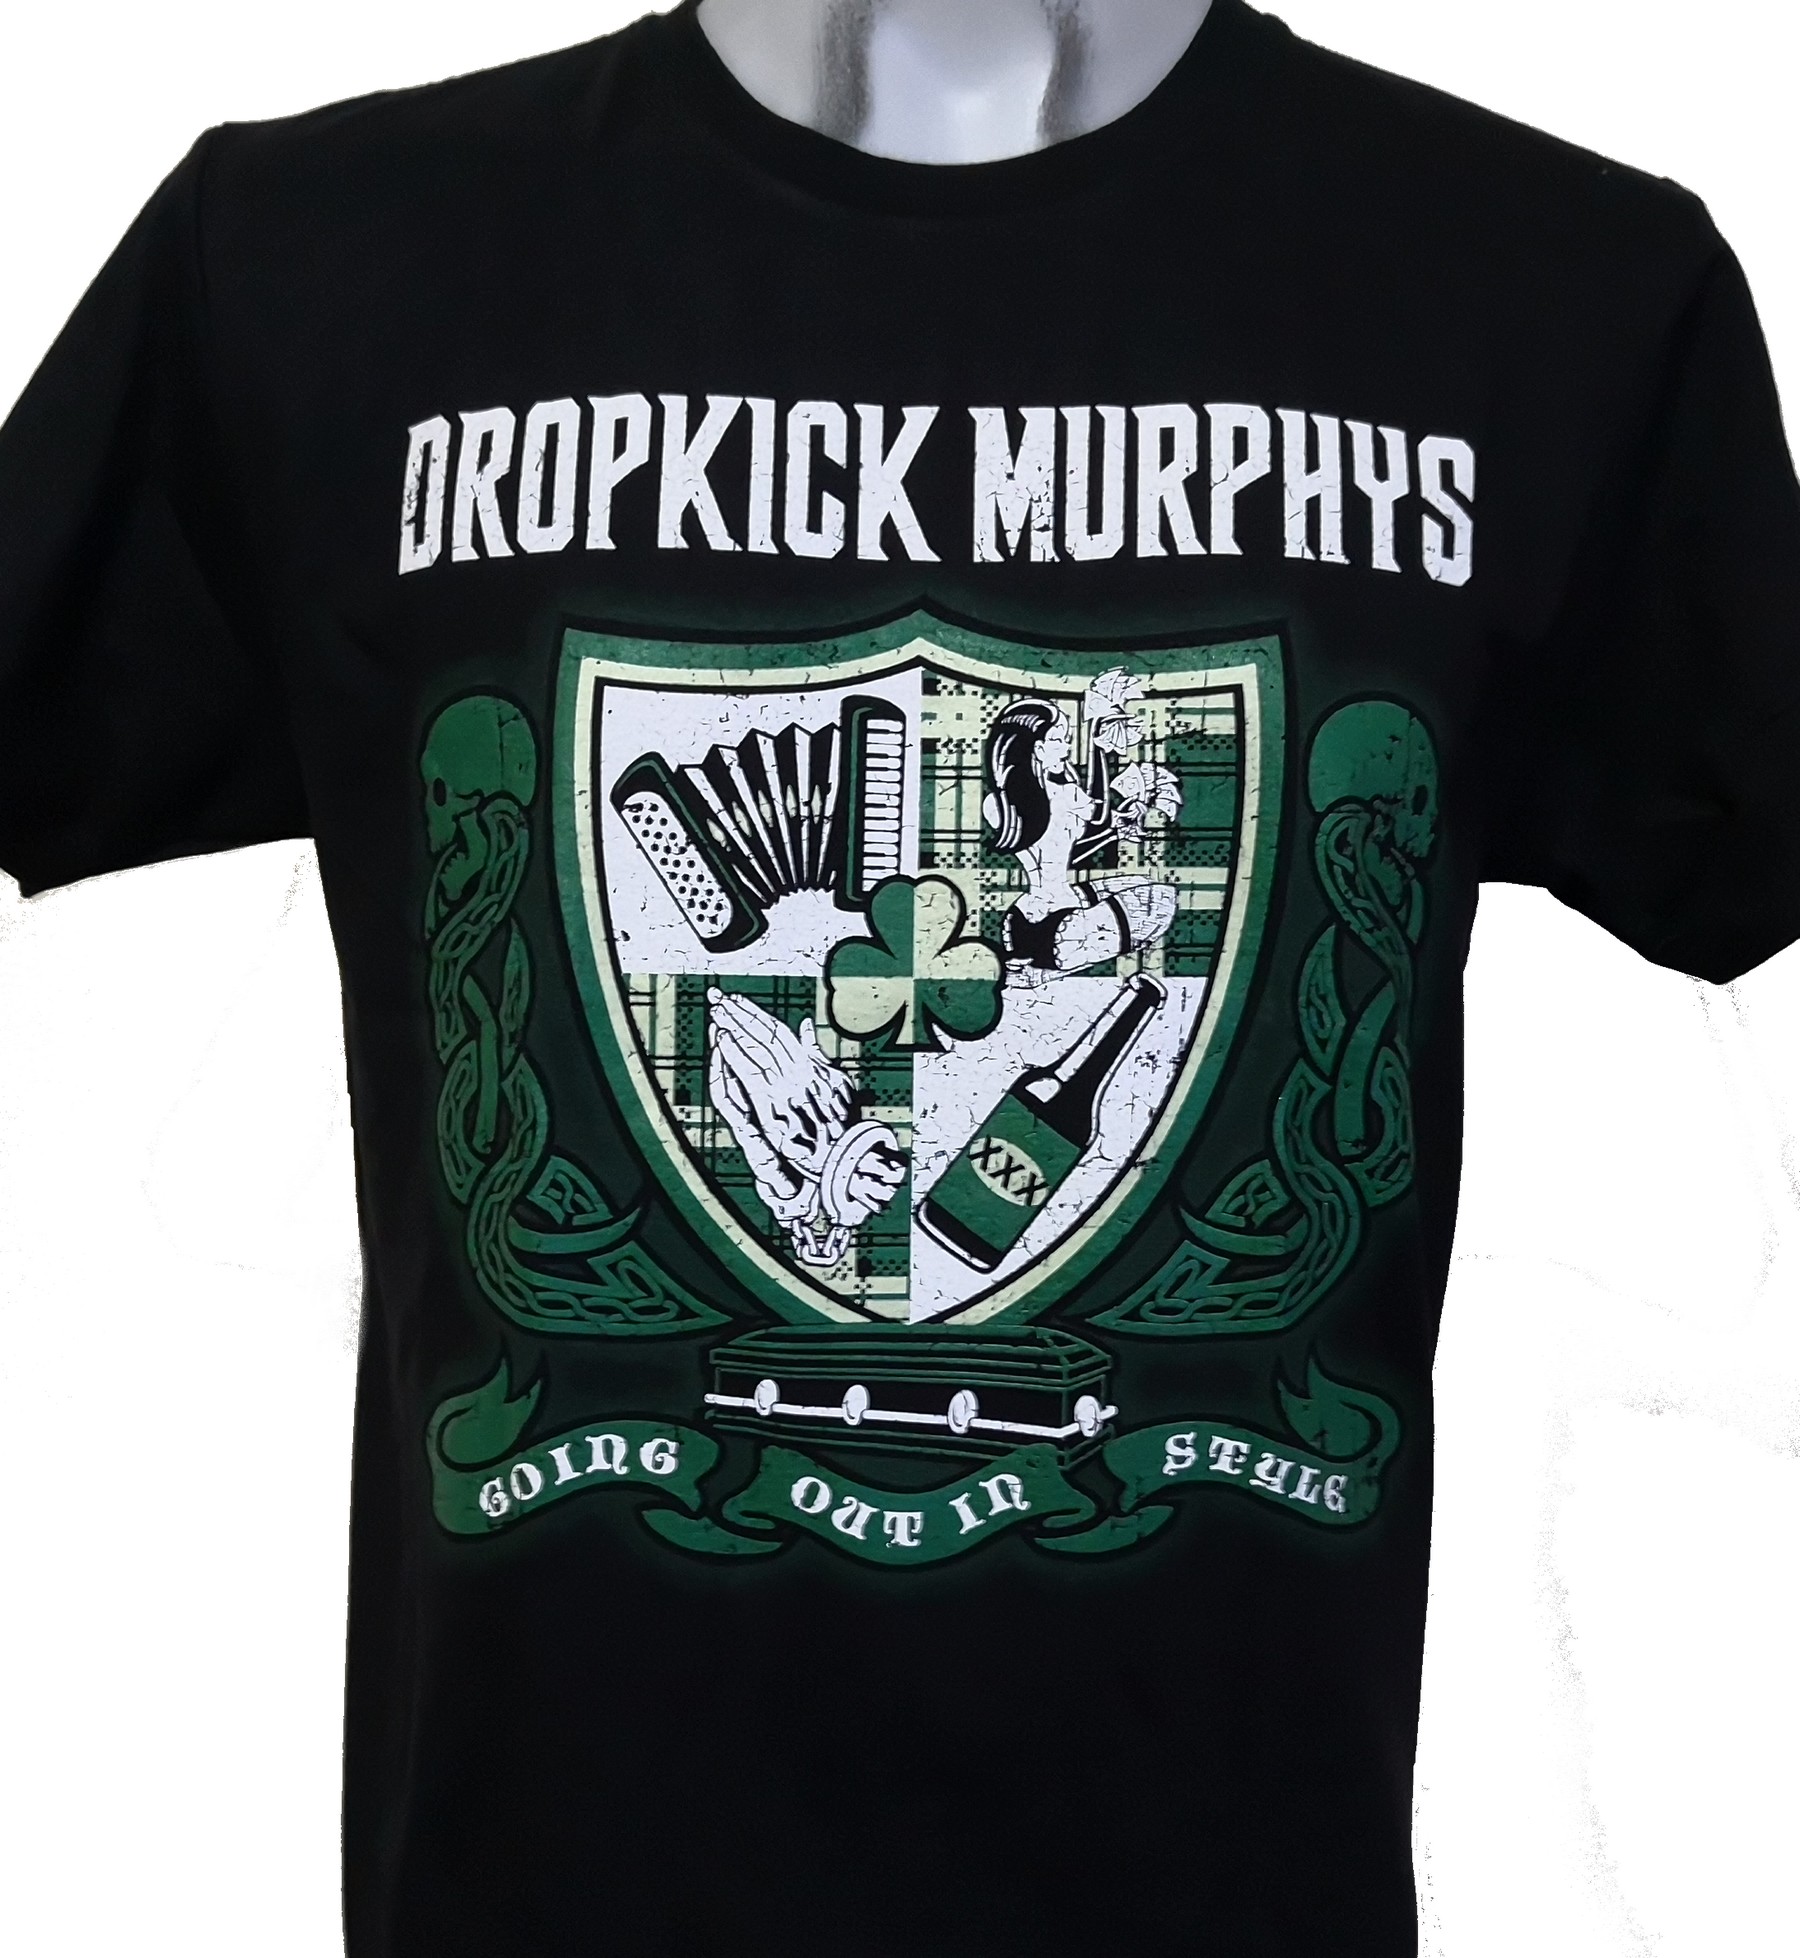 Dropkick Murphys T Shirt Going Out In Style Size S Roxxbkk